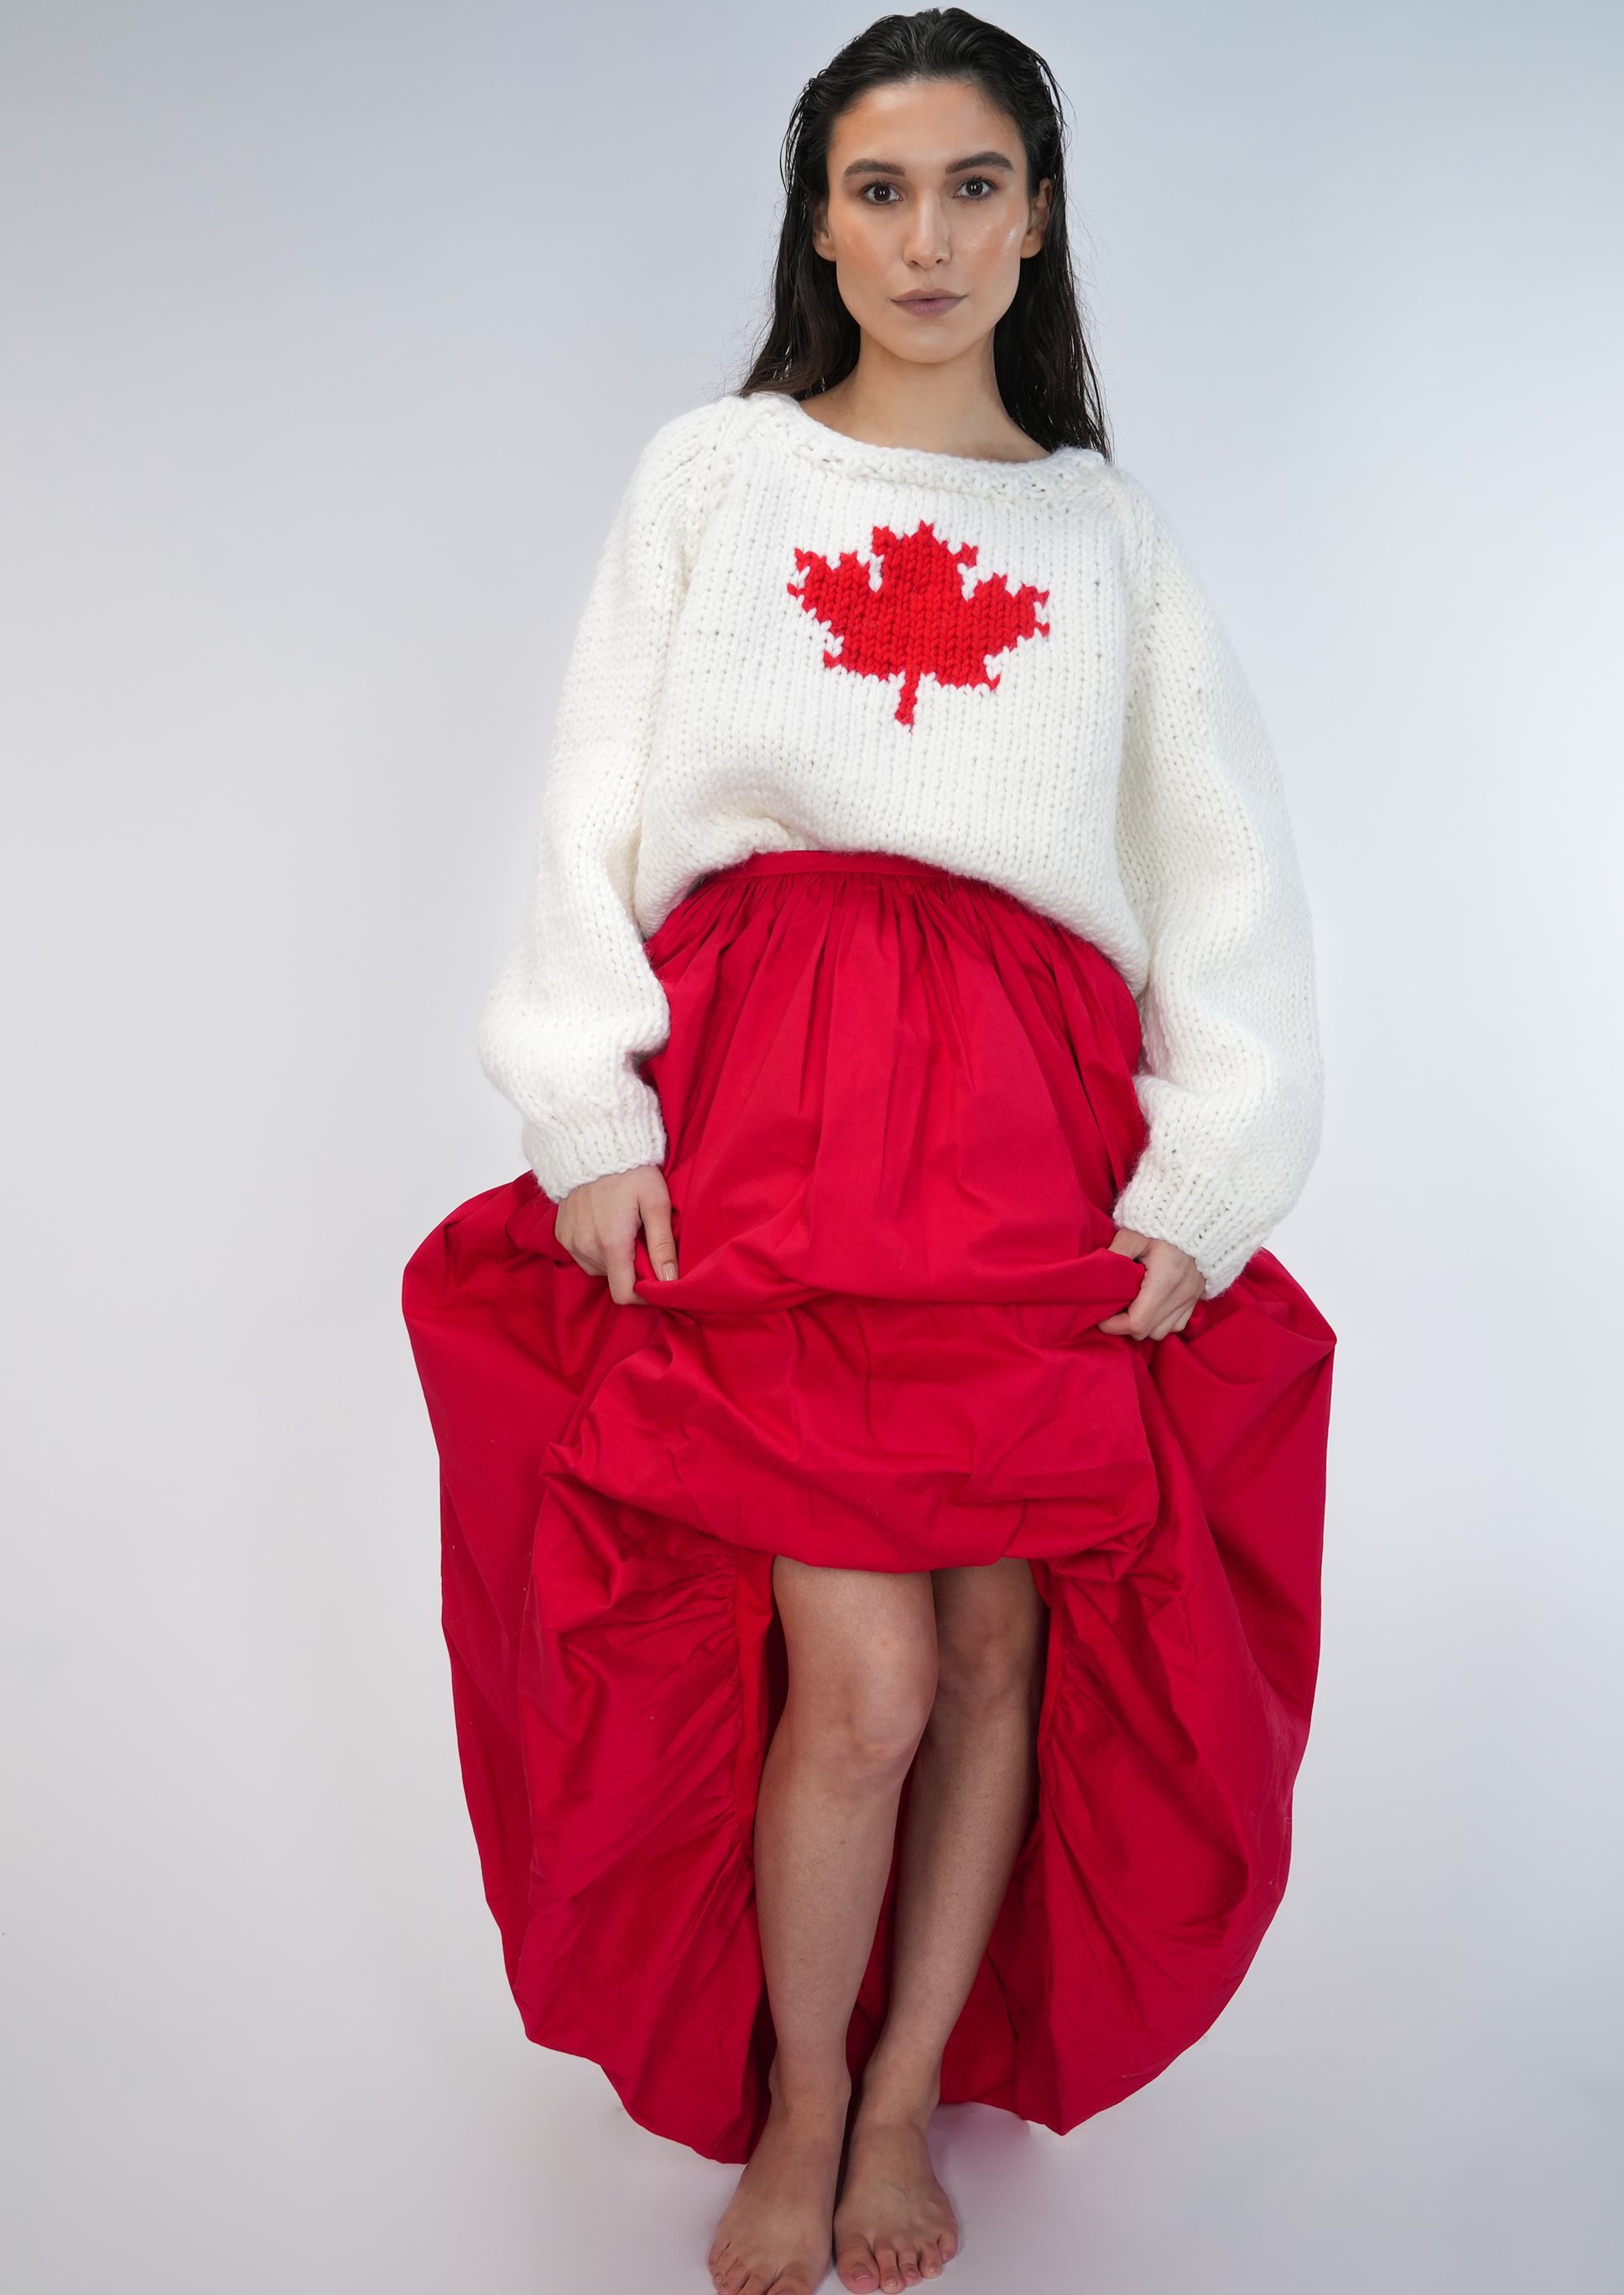 The Canada Pullover